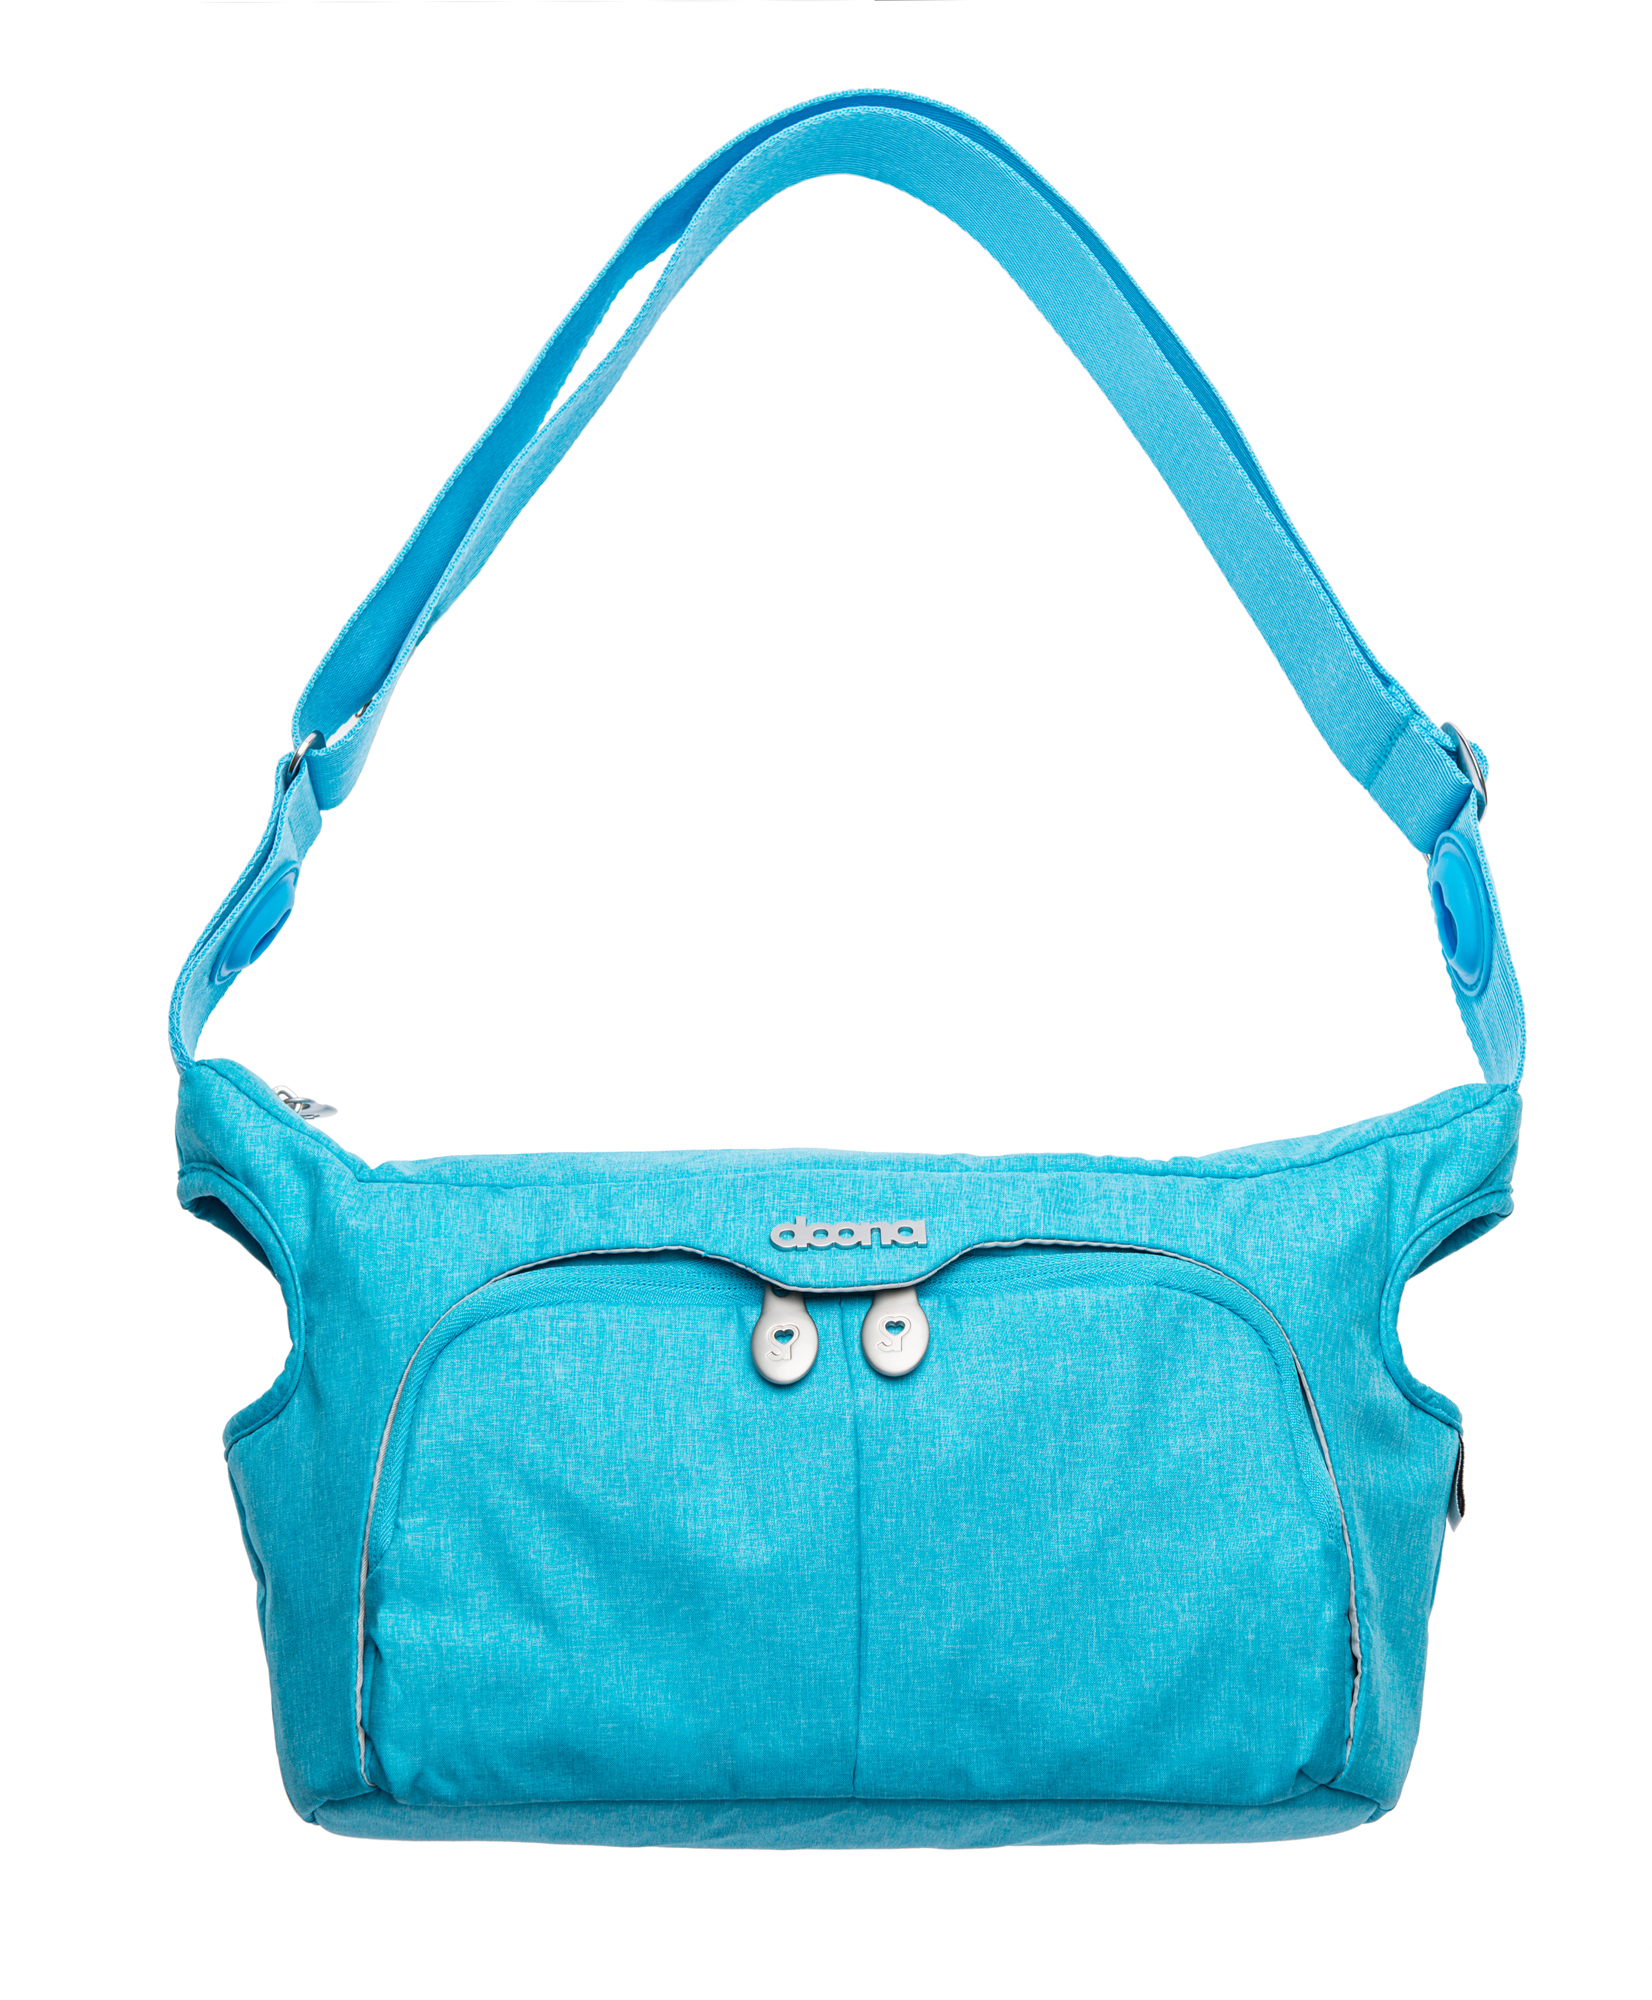 Prebaľovacia taška, Turquoise